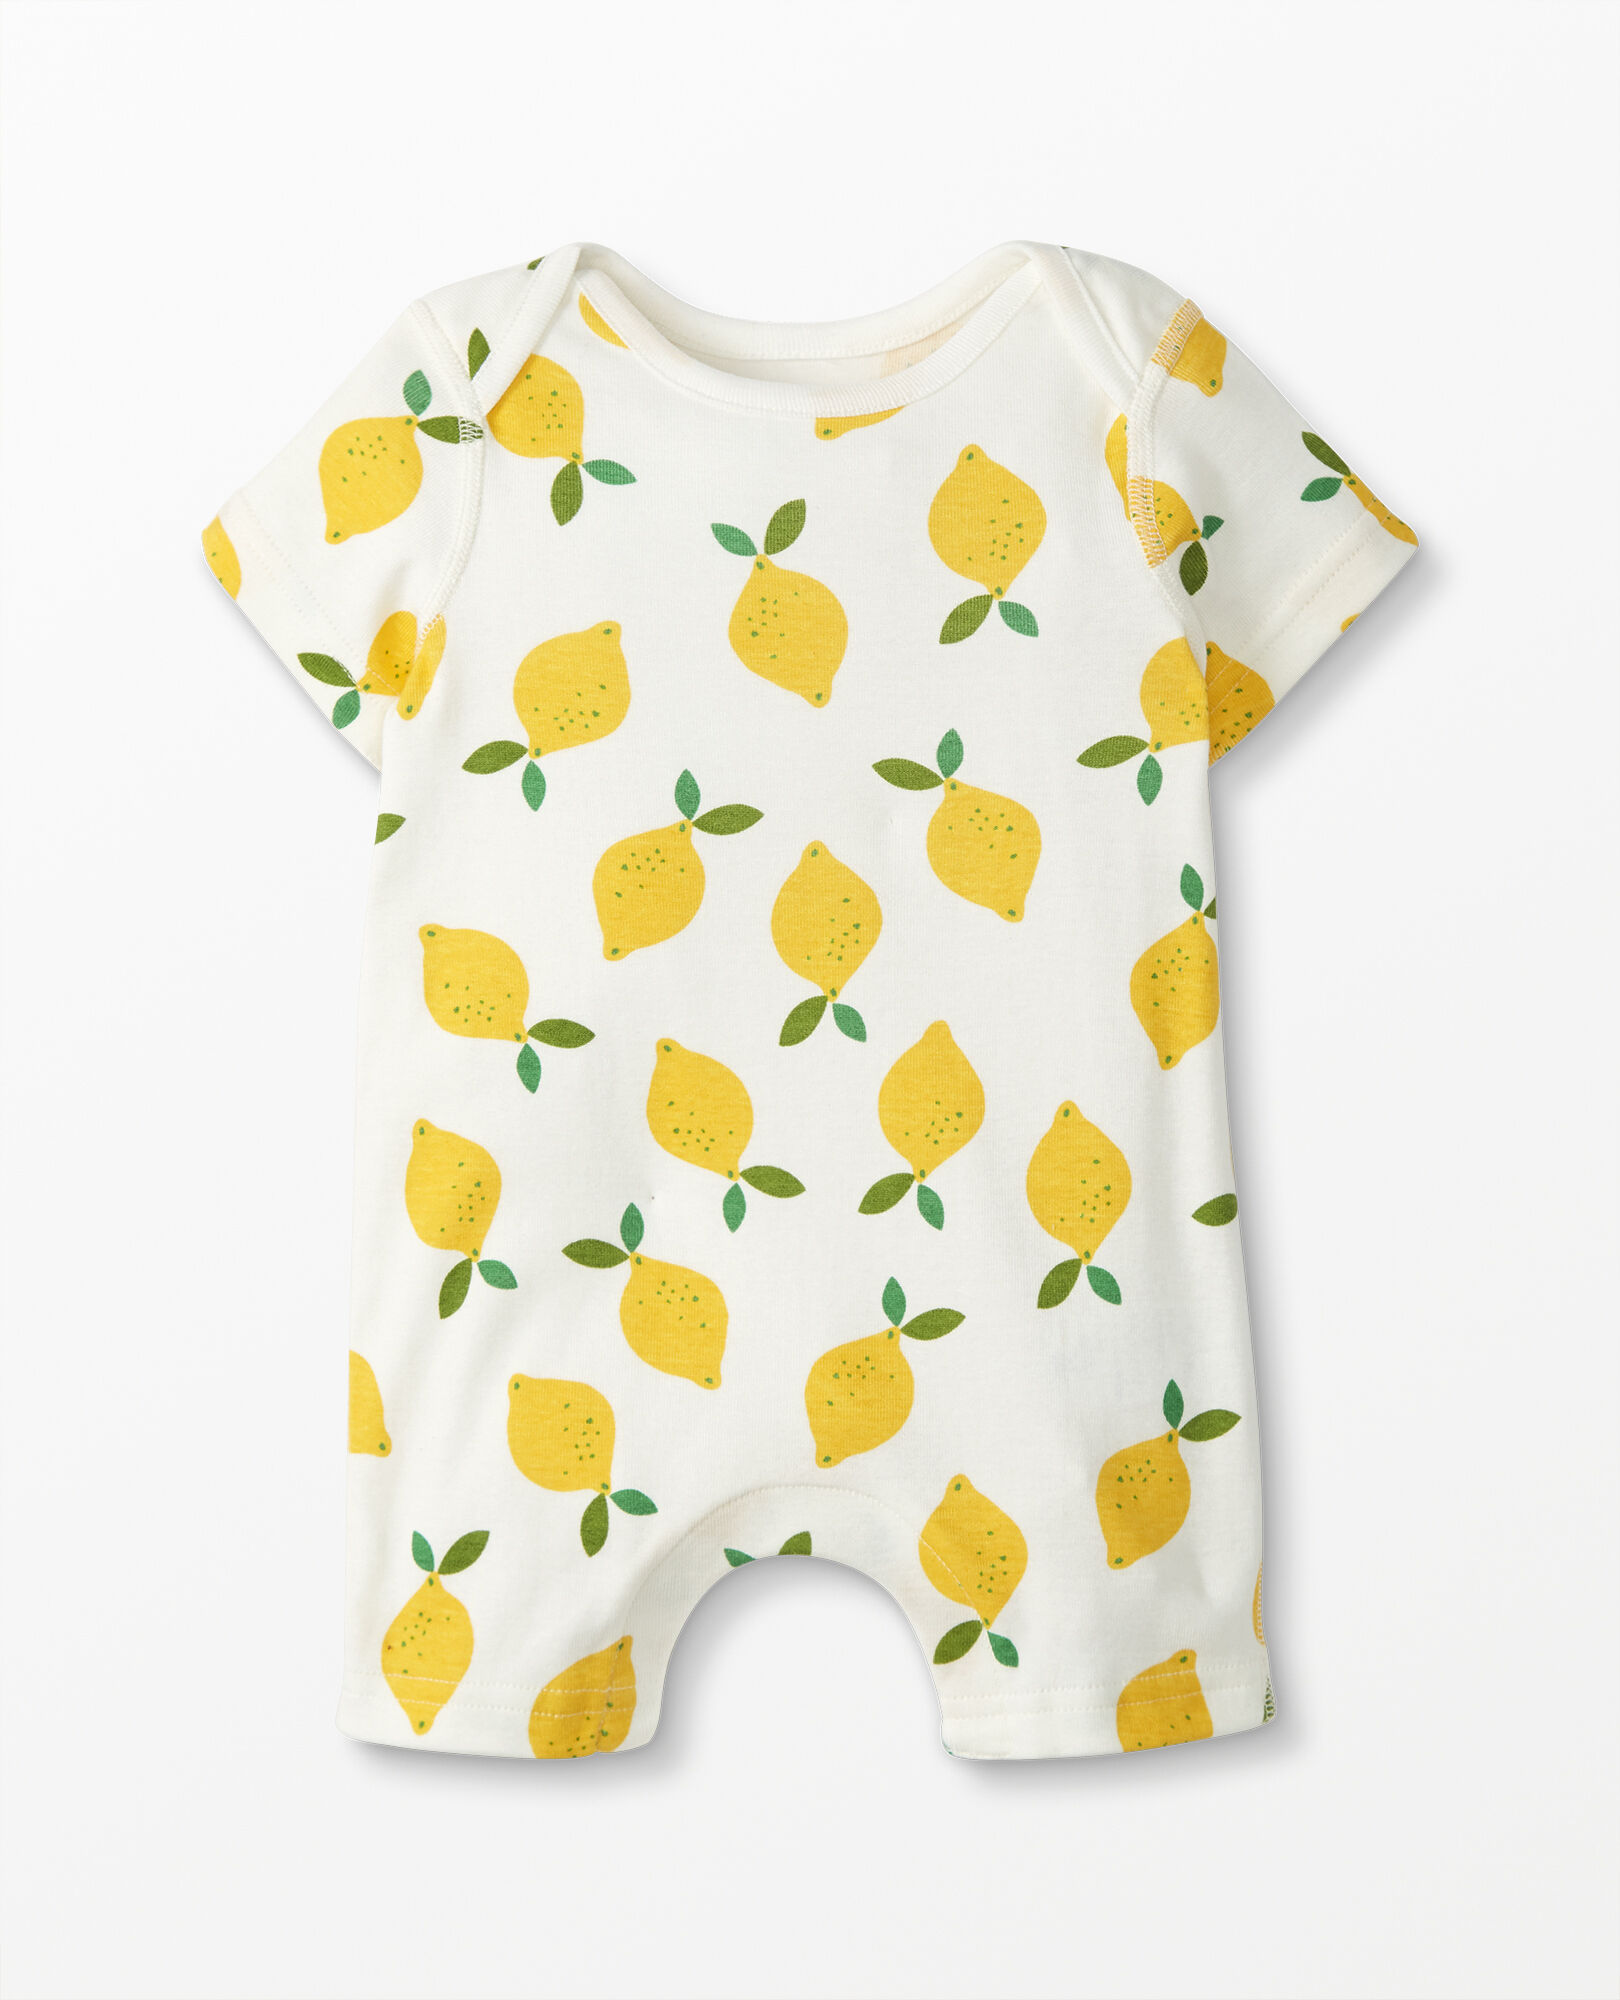 Lemon Bike Cotton Baby Short Sleeve Bodysuits Jersey Rompers